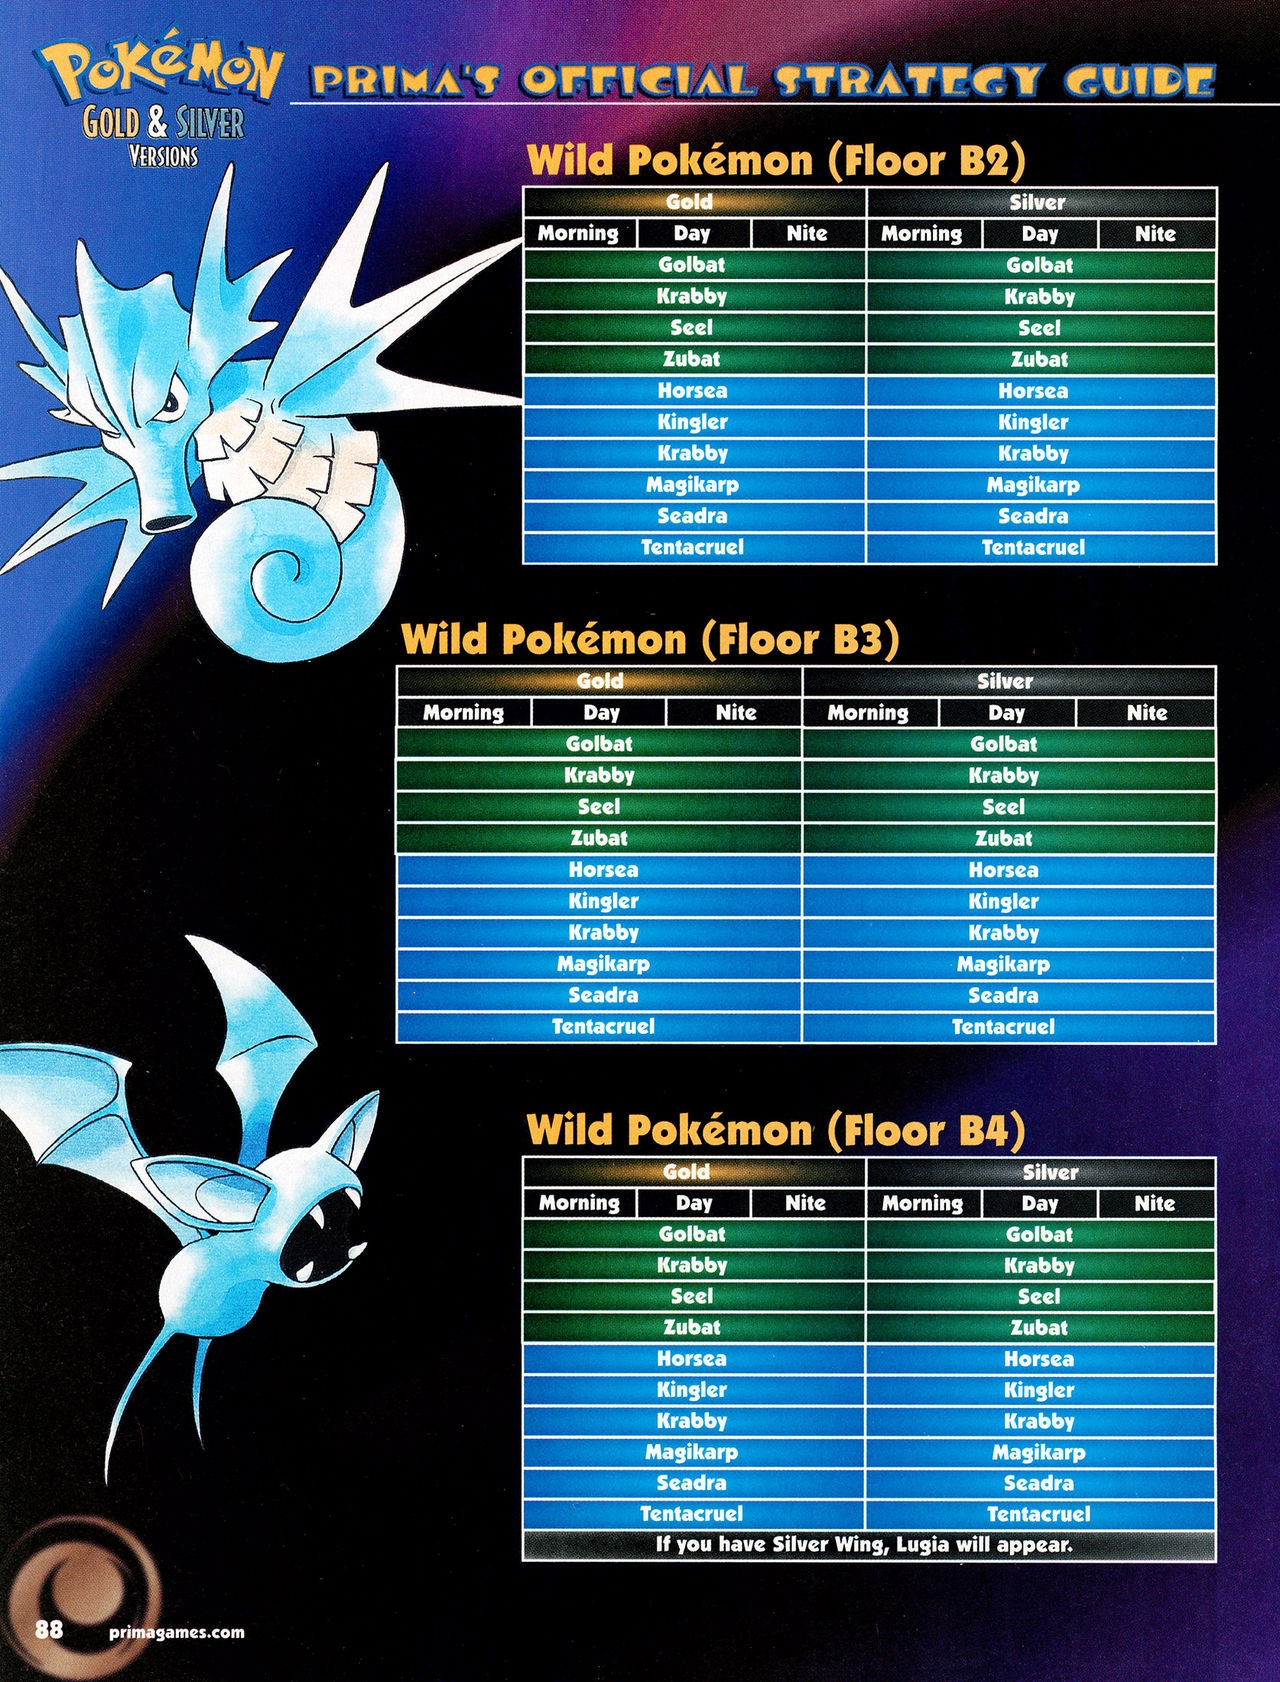 Pokémon Gold & Silver Versions - Strategy Guide 89